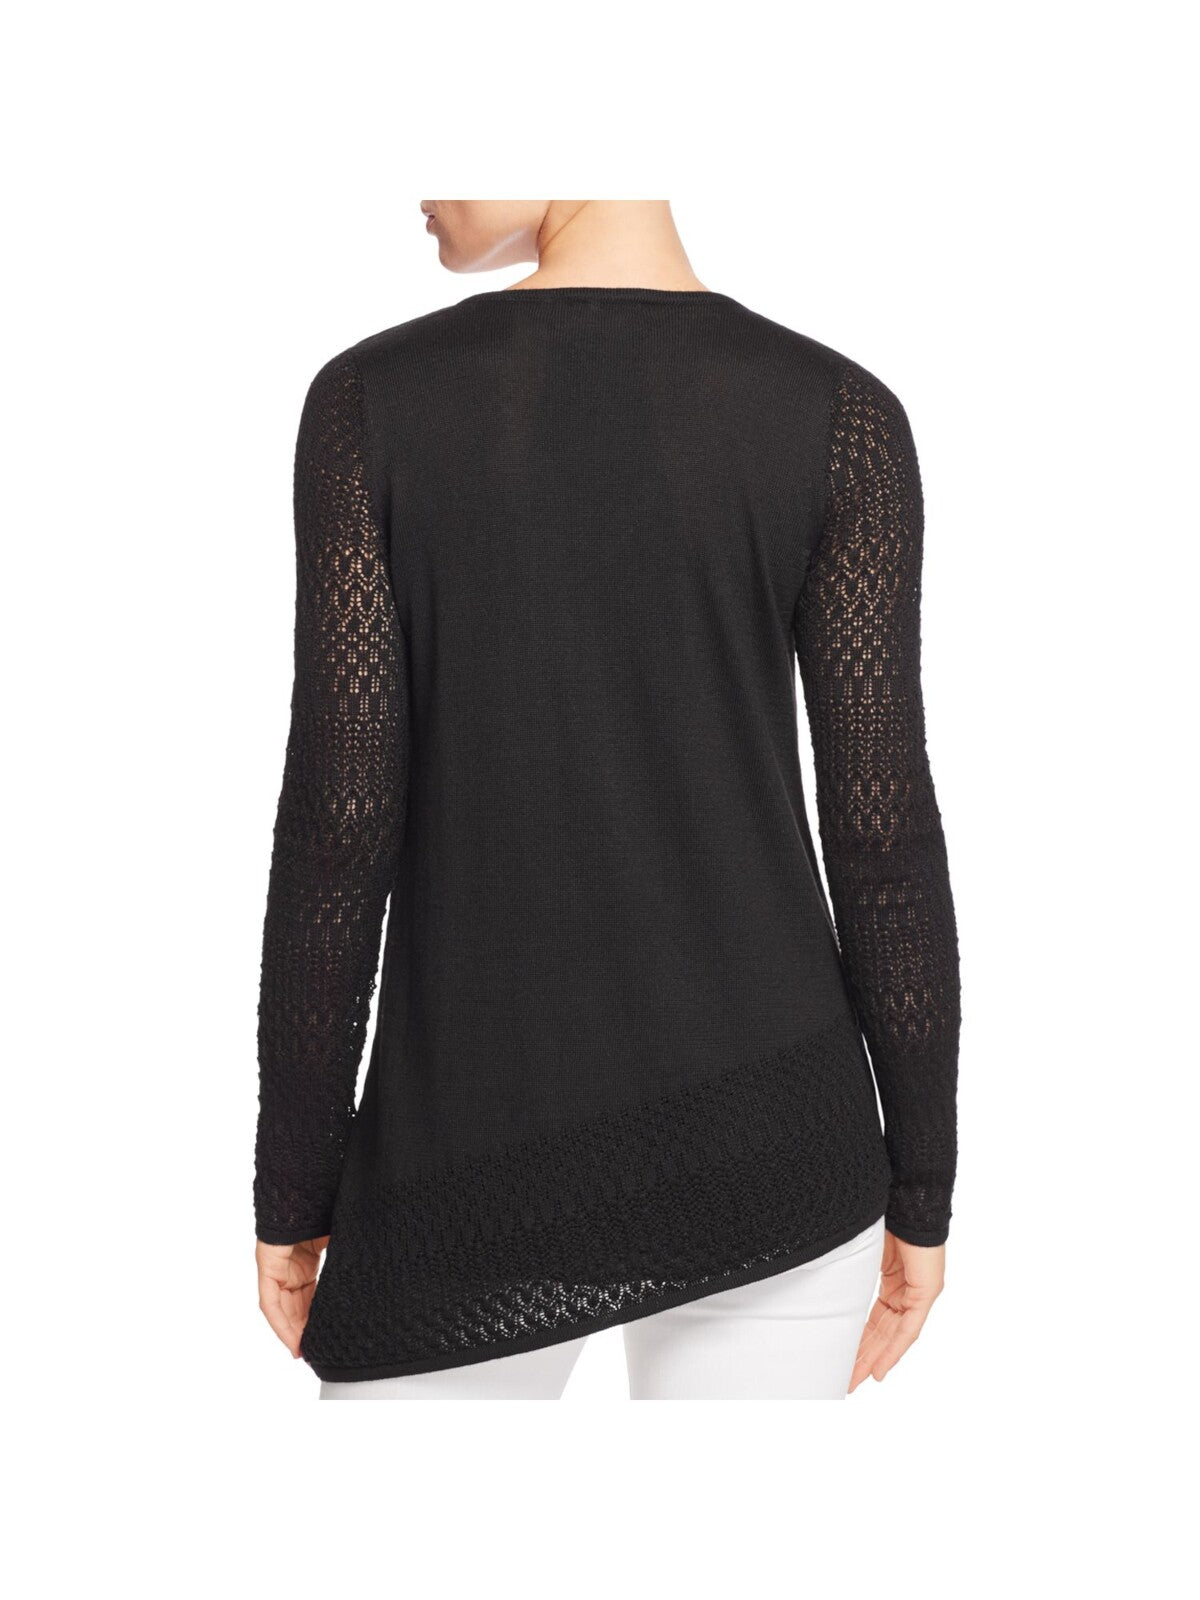 DESIGN HISTORY Womens Black Knit Textured Sheer Asymmetrical Hem Long Sleeve V Neck Sweater S